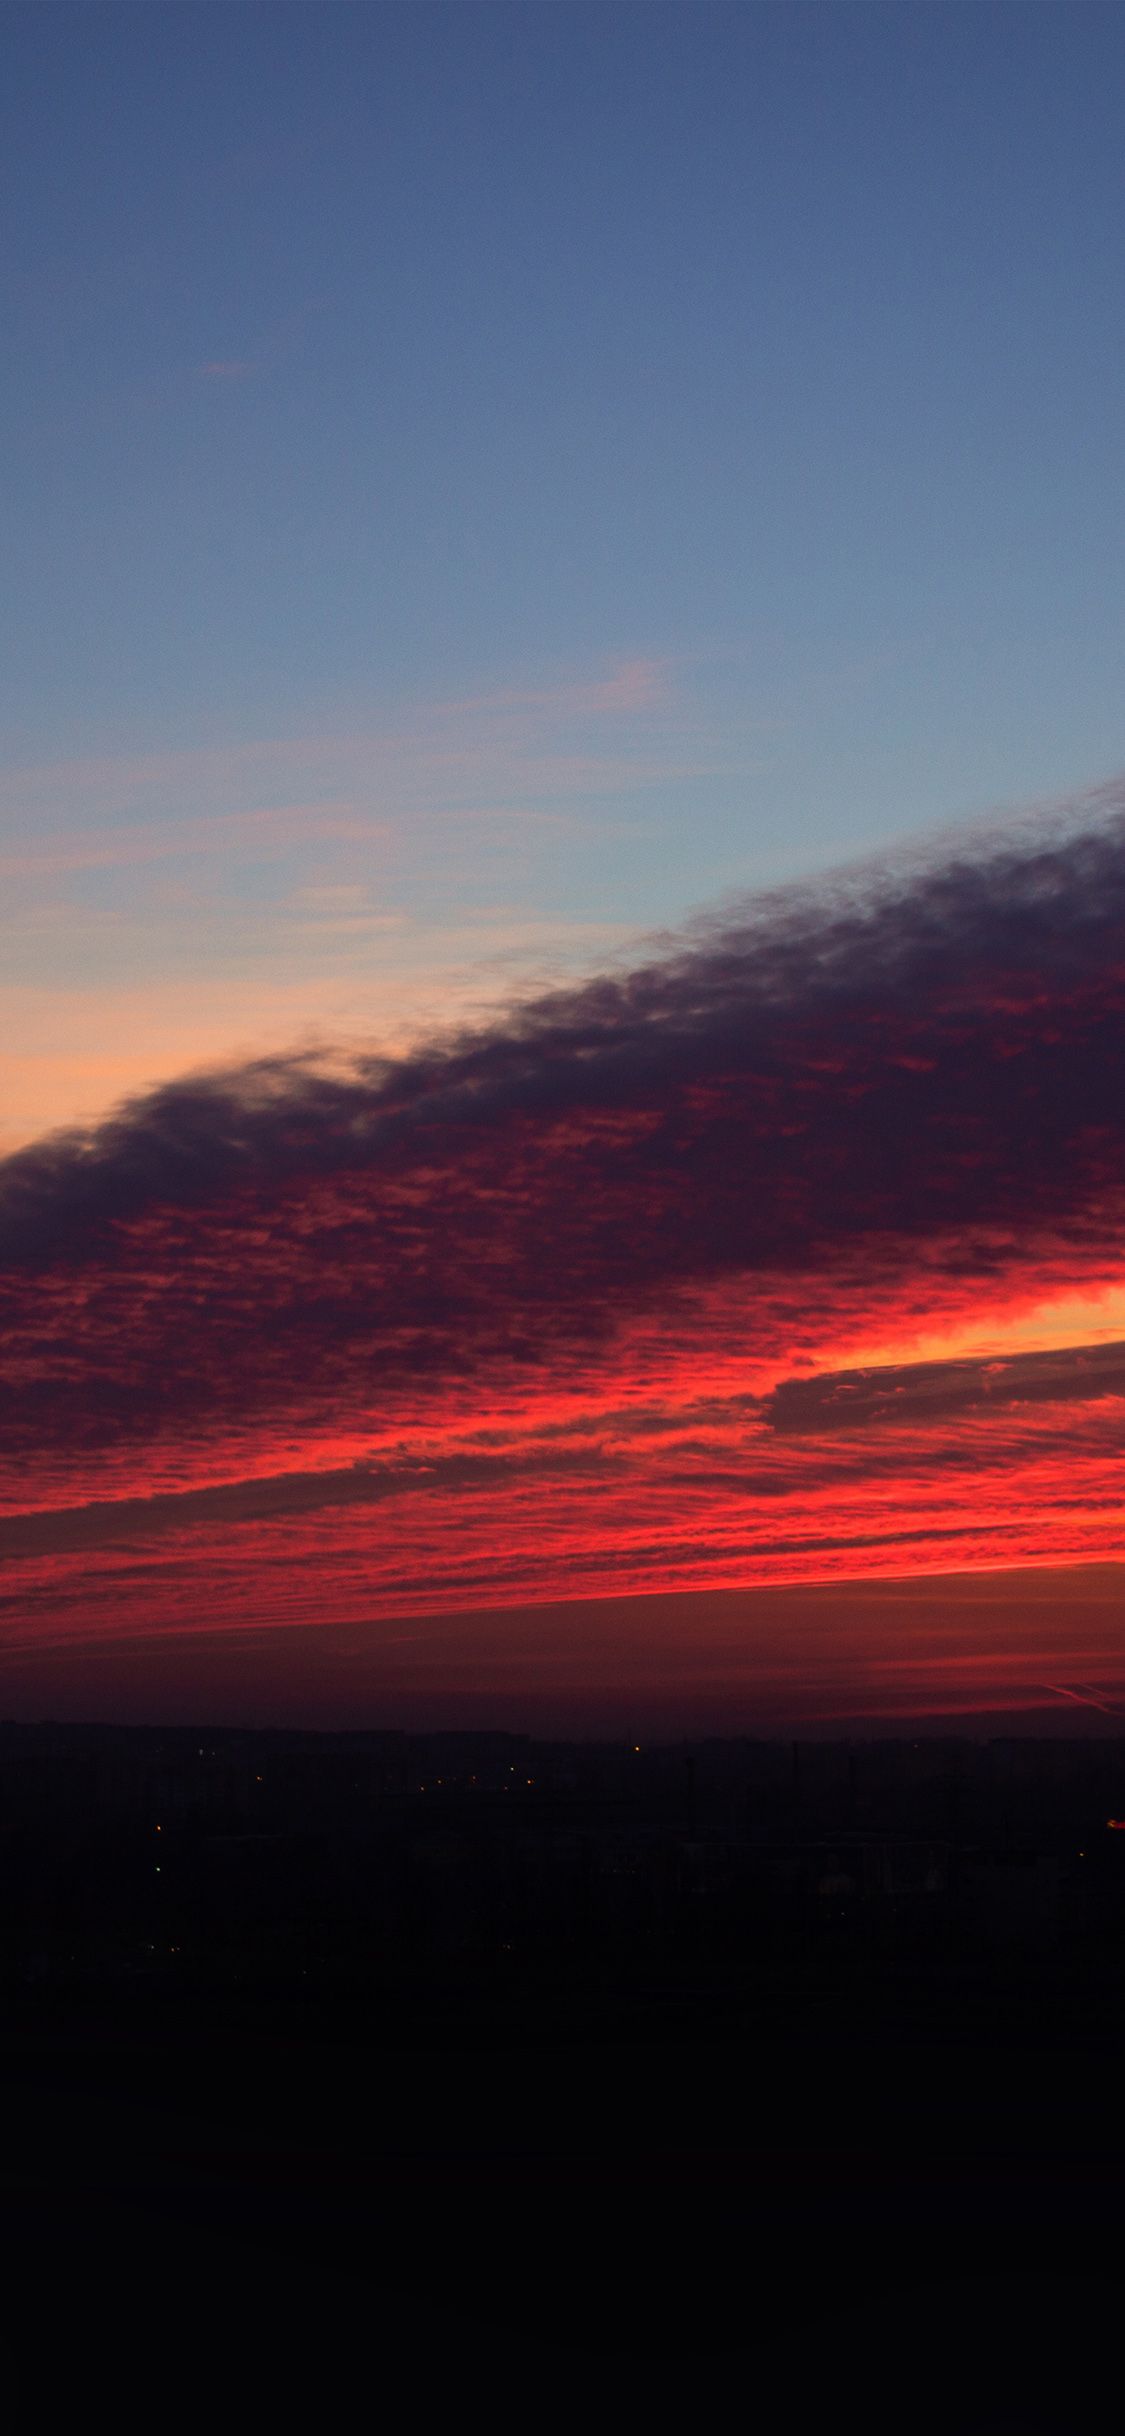 iPhone X wallpaper. sky sunset cloud red